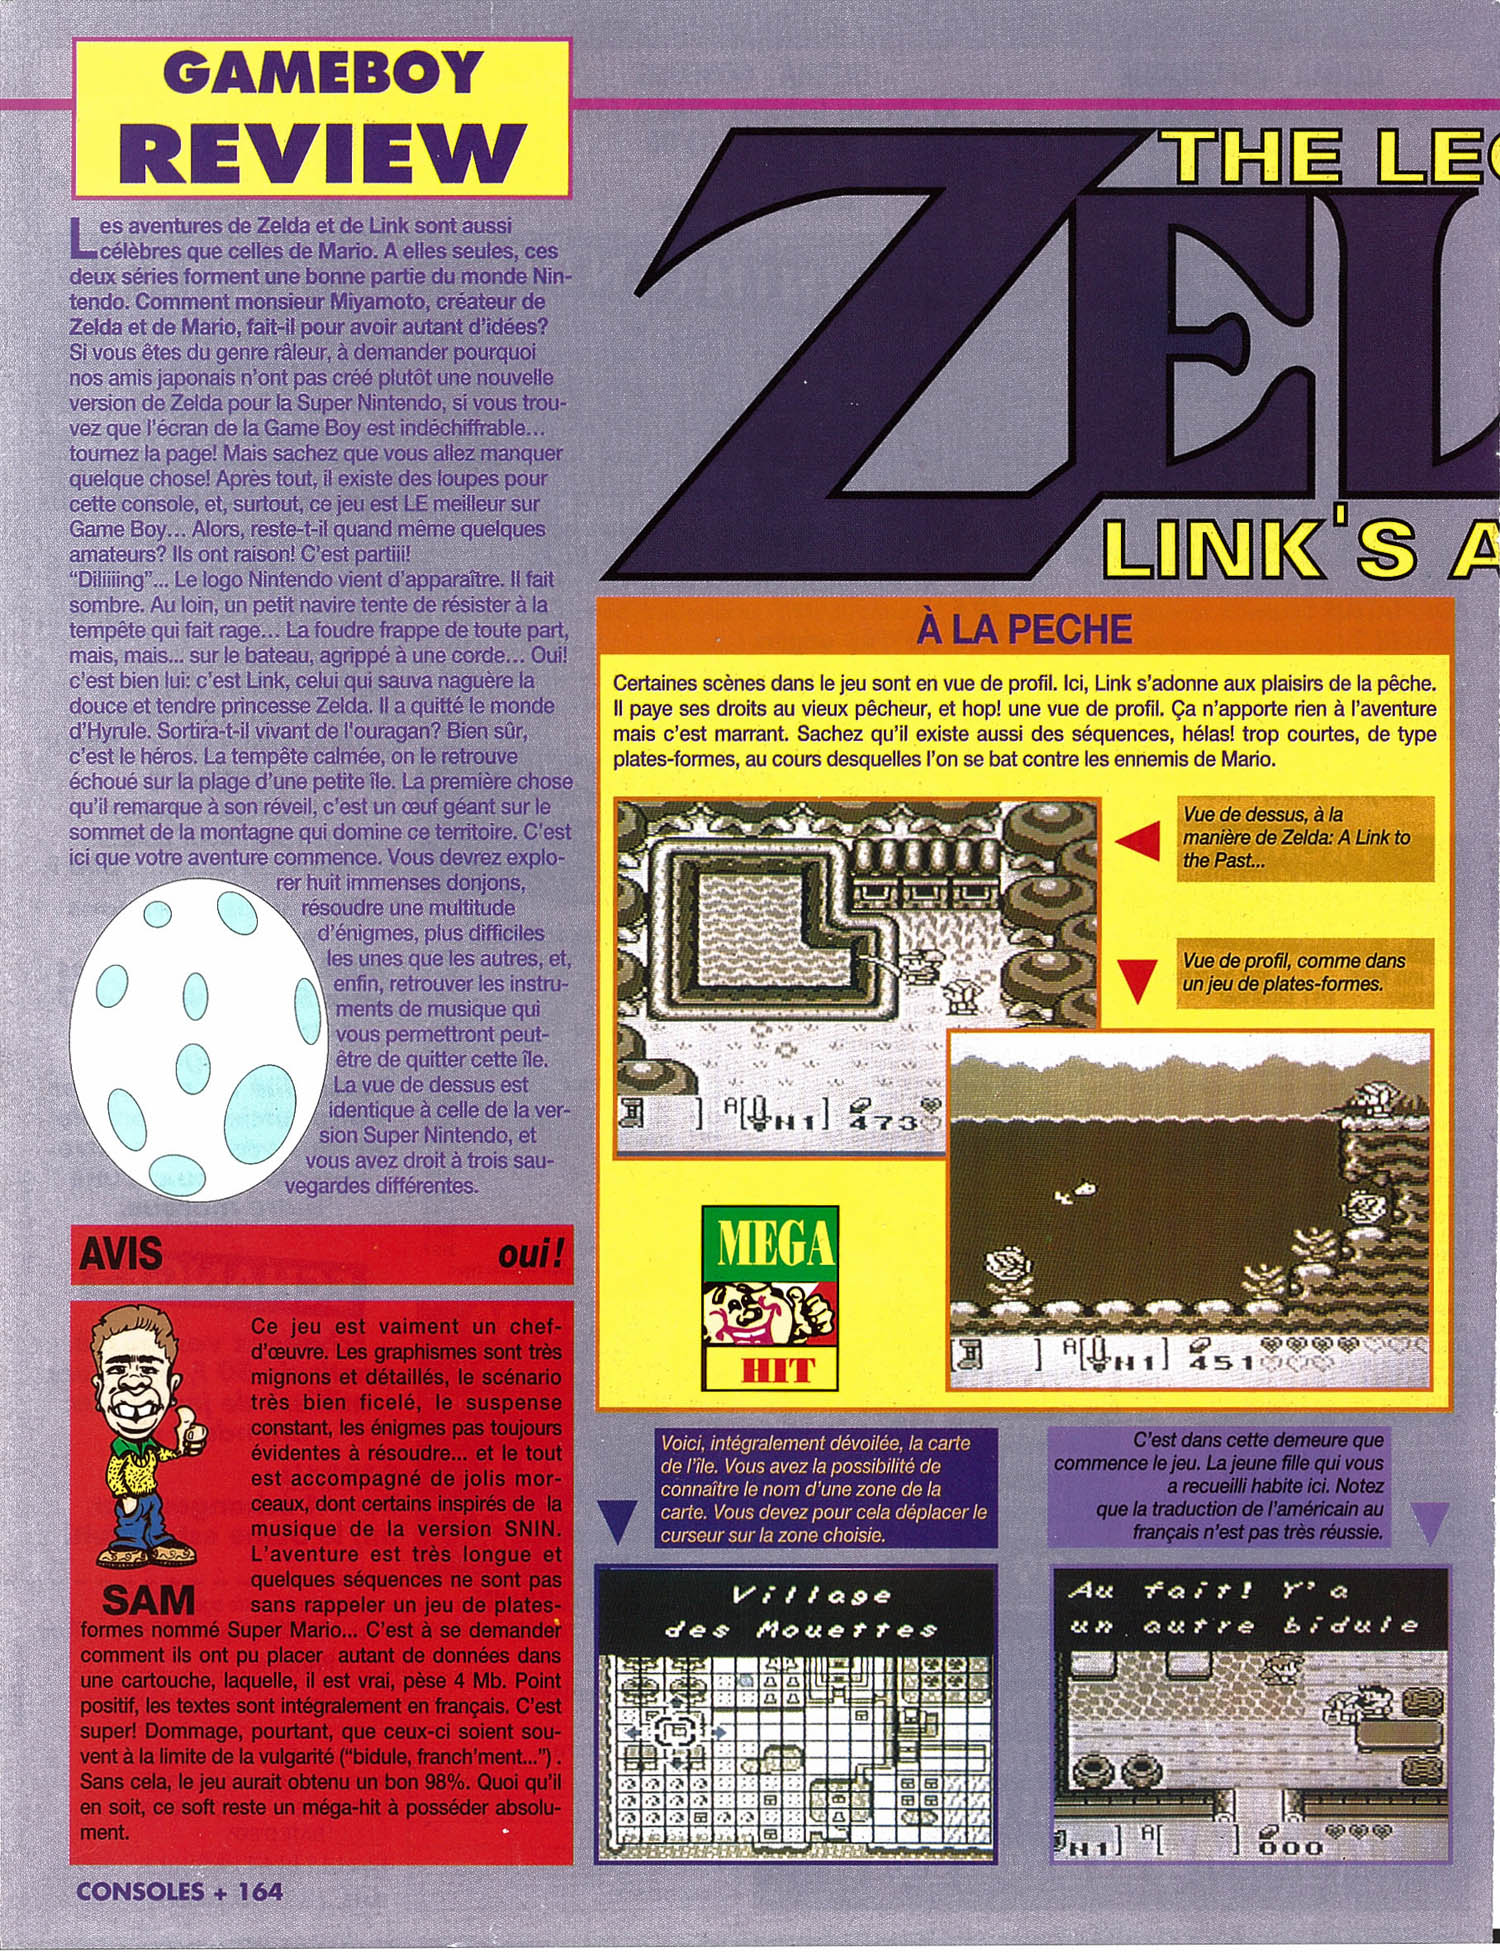 tests//56/Consoles + 025 - Page 164 (novembre 1993).jpg